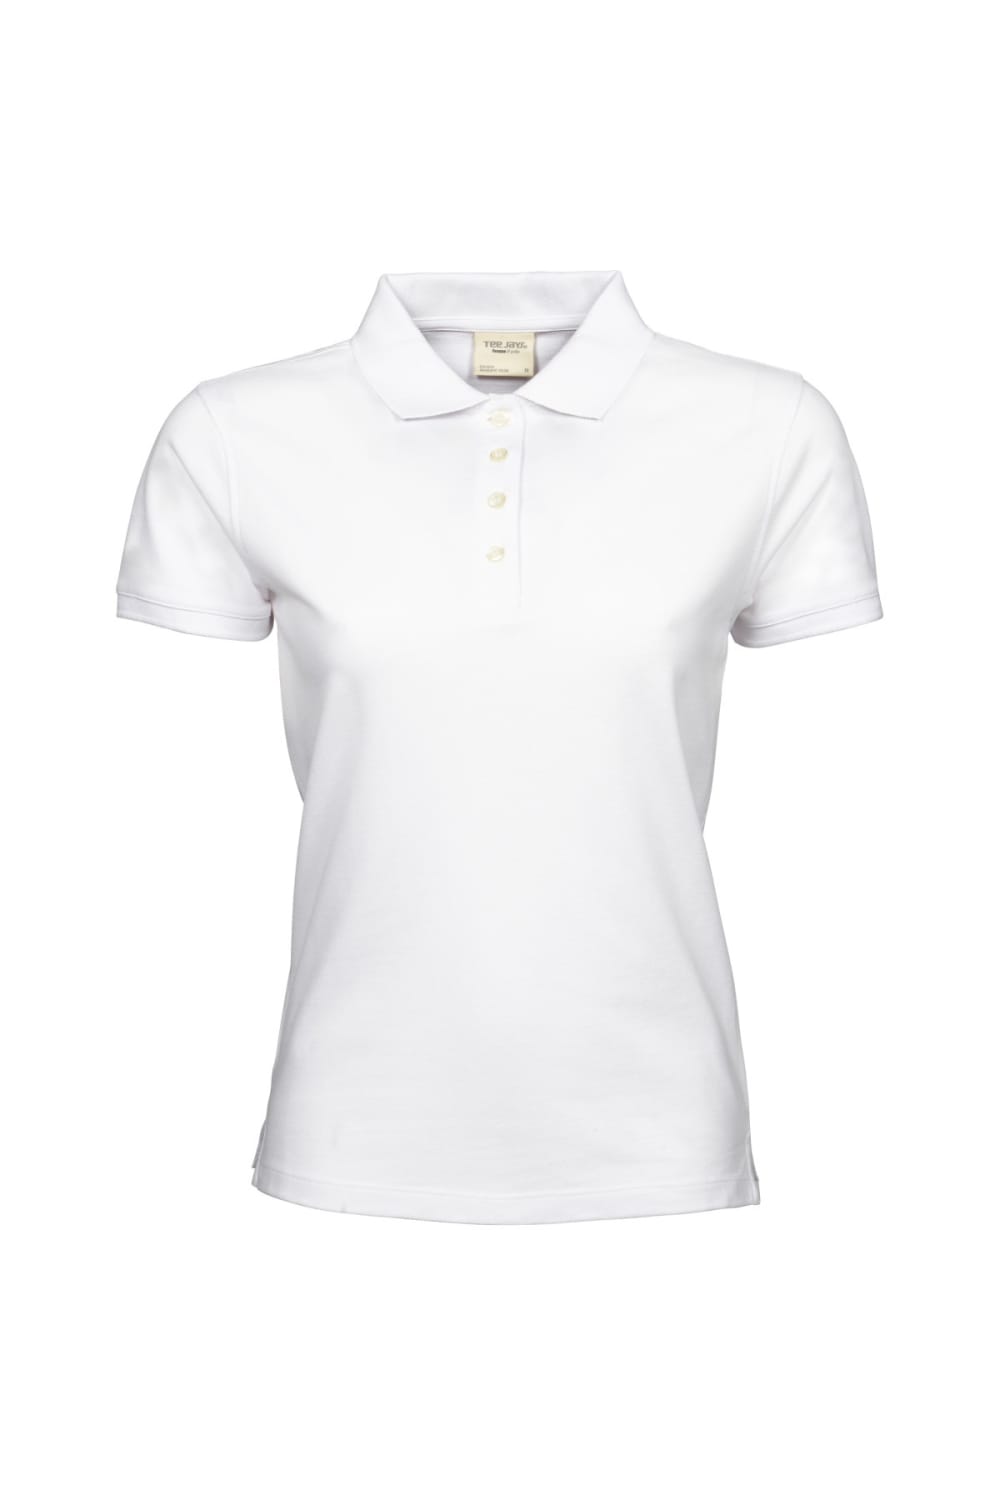 Tee Jays Womens/Ladies Heavy Short Sleeve Polo Shirt (White)